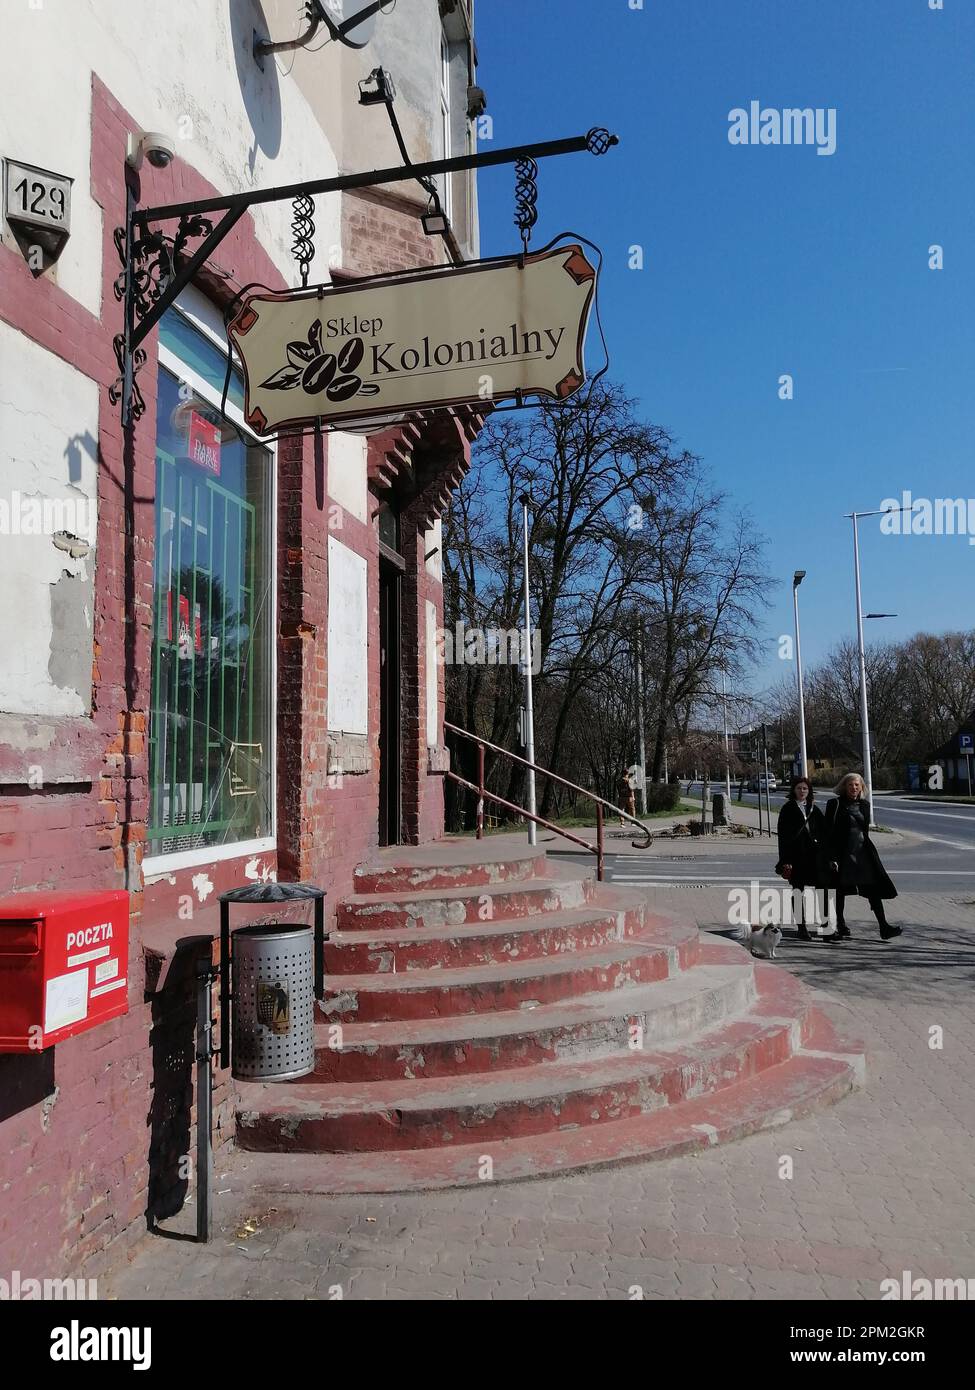 Ein vertikales Bild des alten Sklad Kolonialny Restaurants in Swiecie, Polen Stockfoto